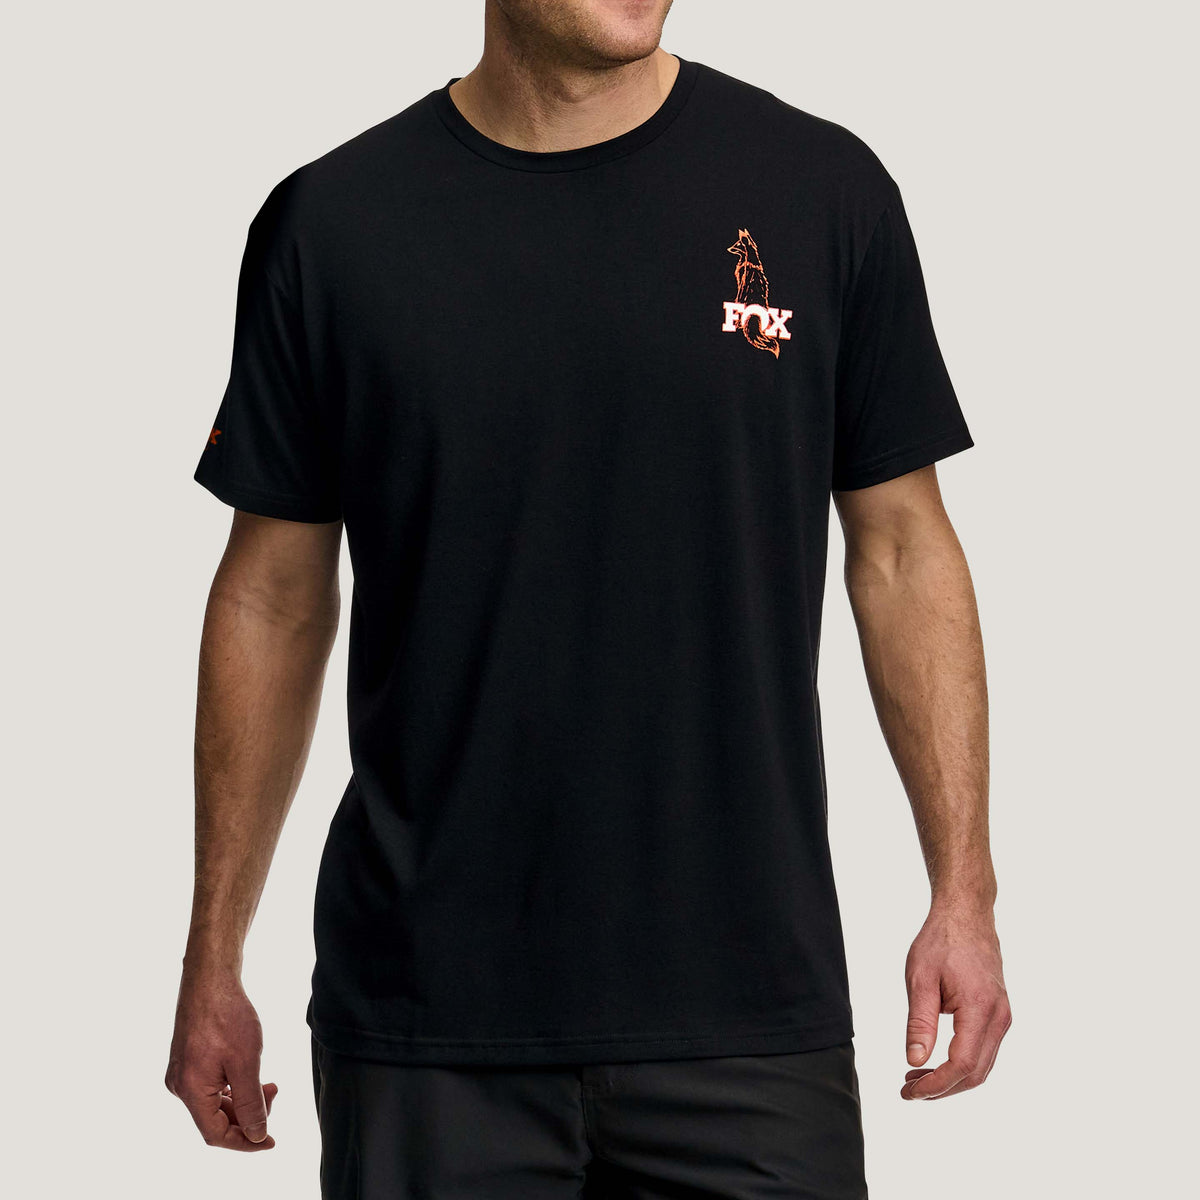 Tailed | Short Sleeve – | | Shop The FOX T-Shirt FOX